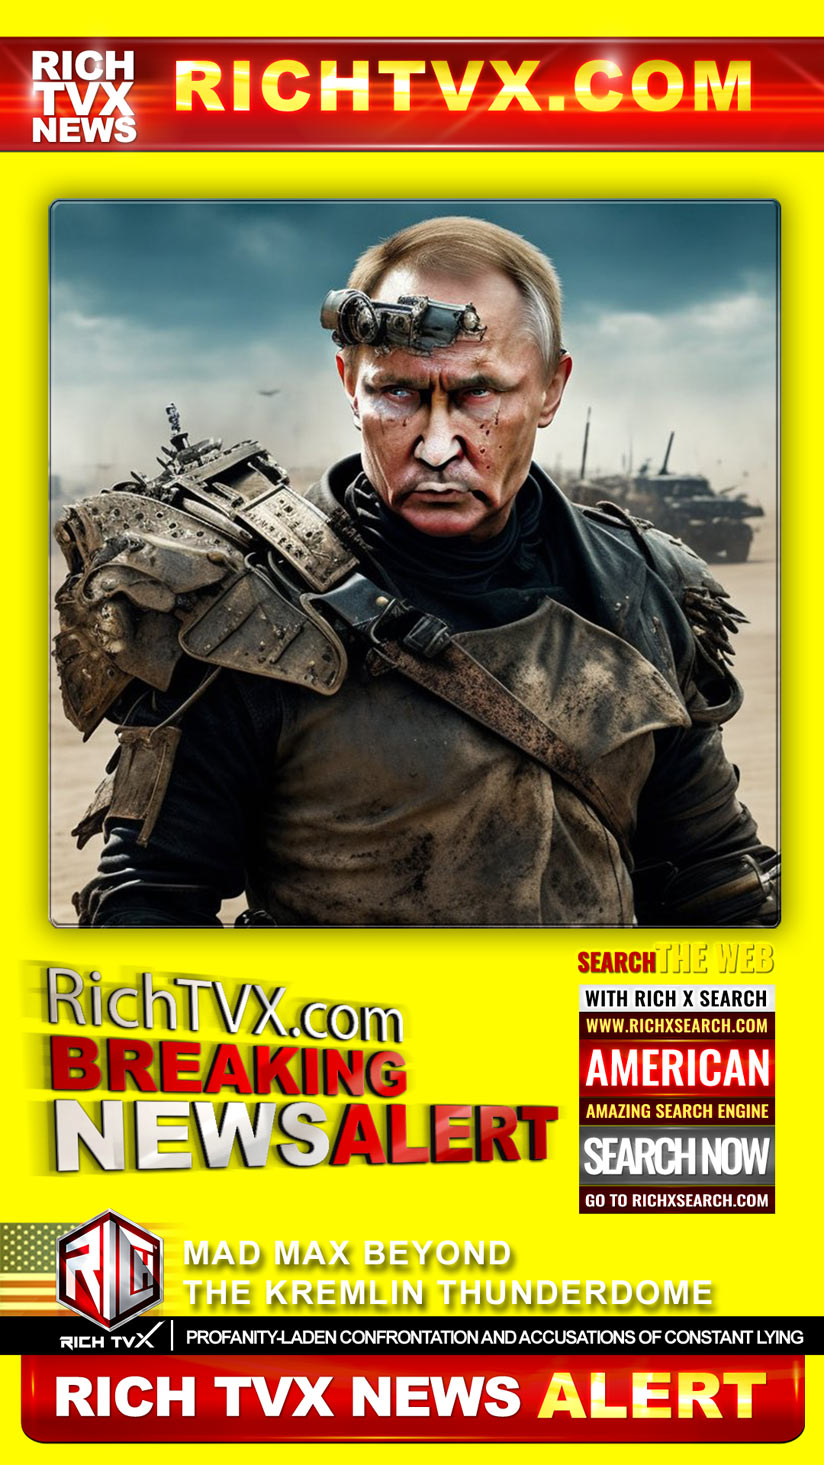 Mad Max Beyond the Kremlin Thunderdome